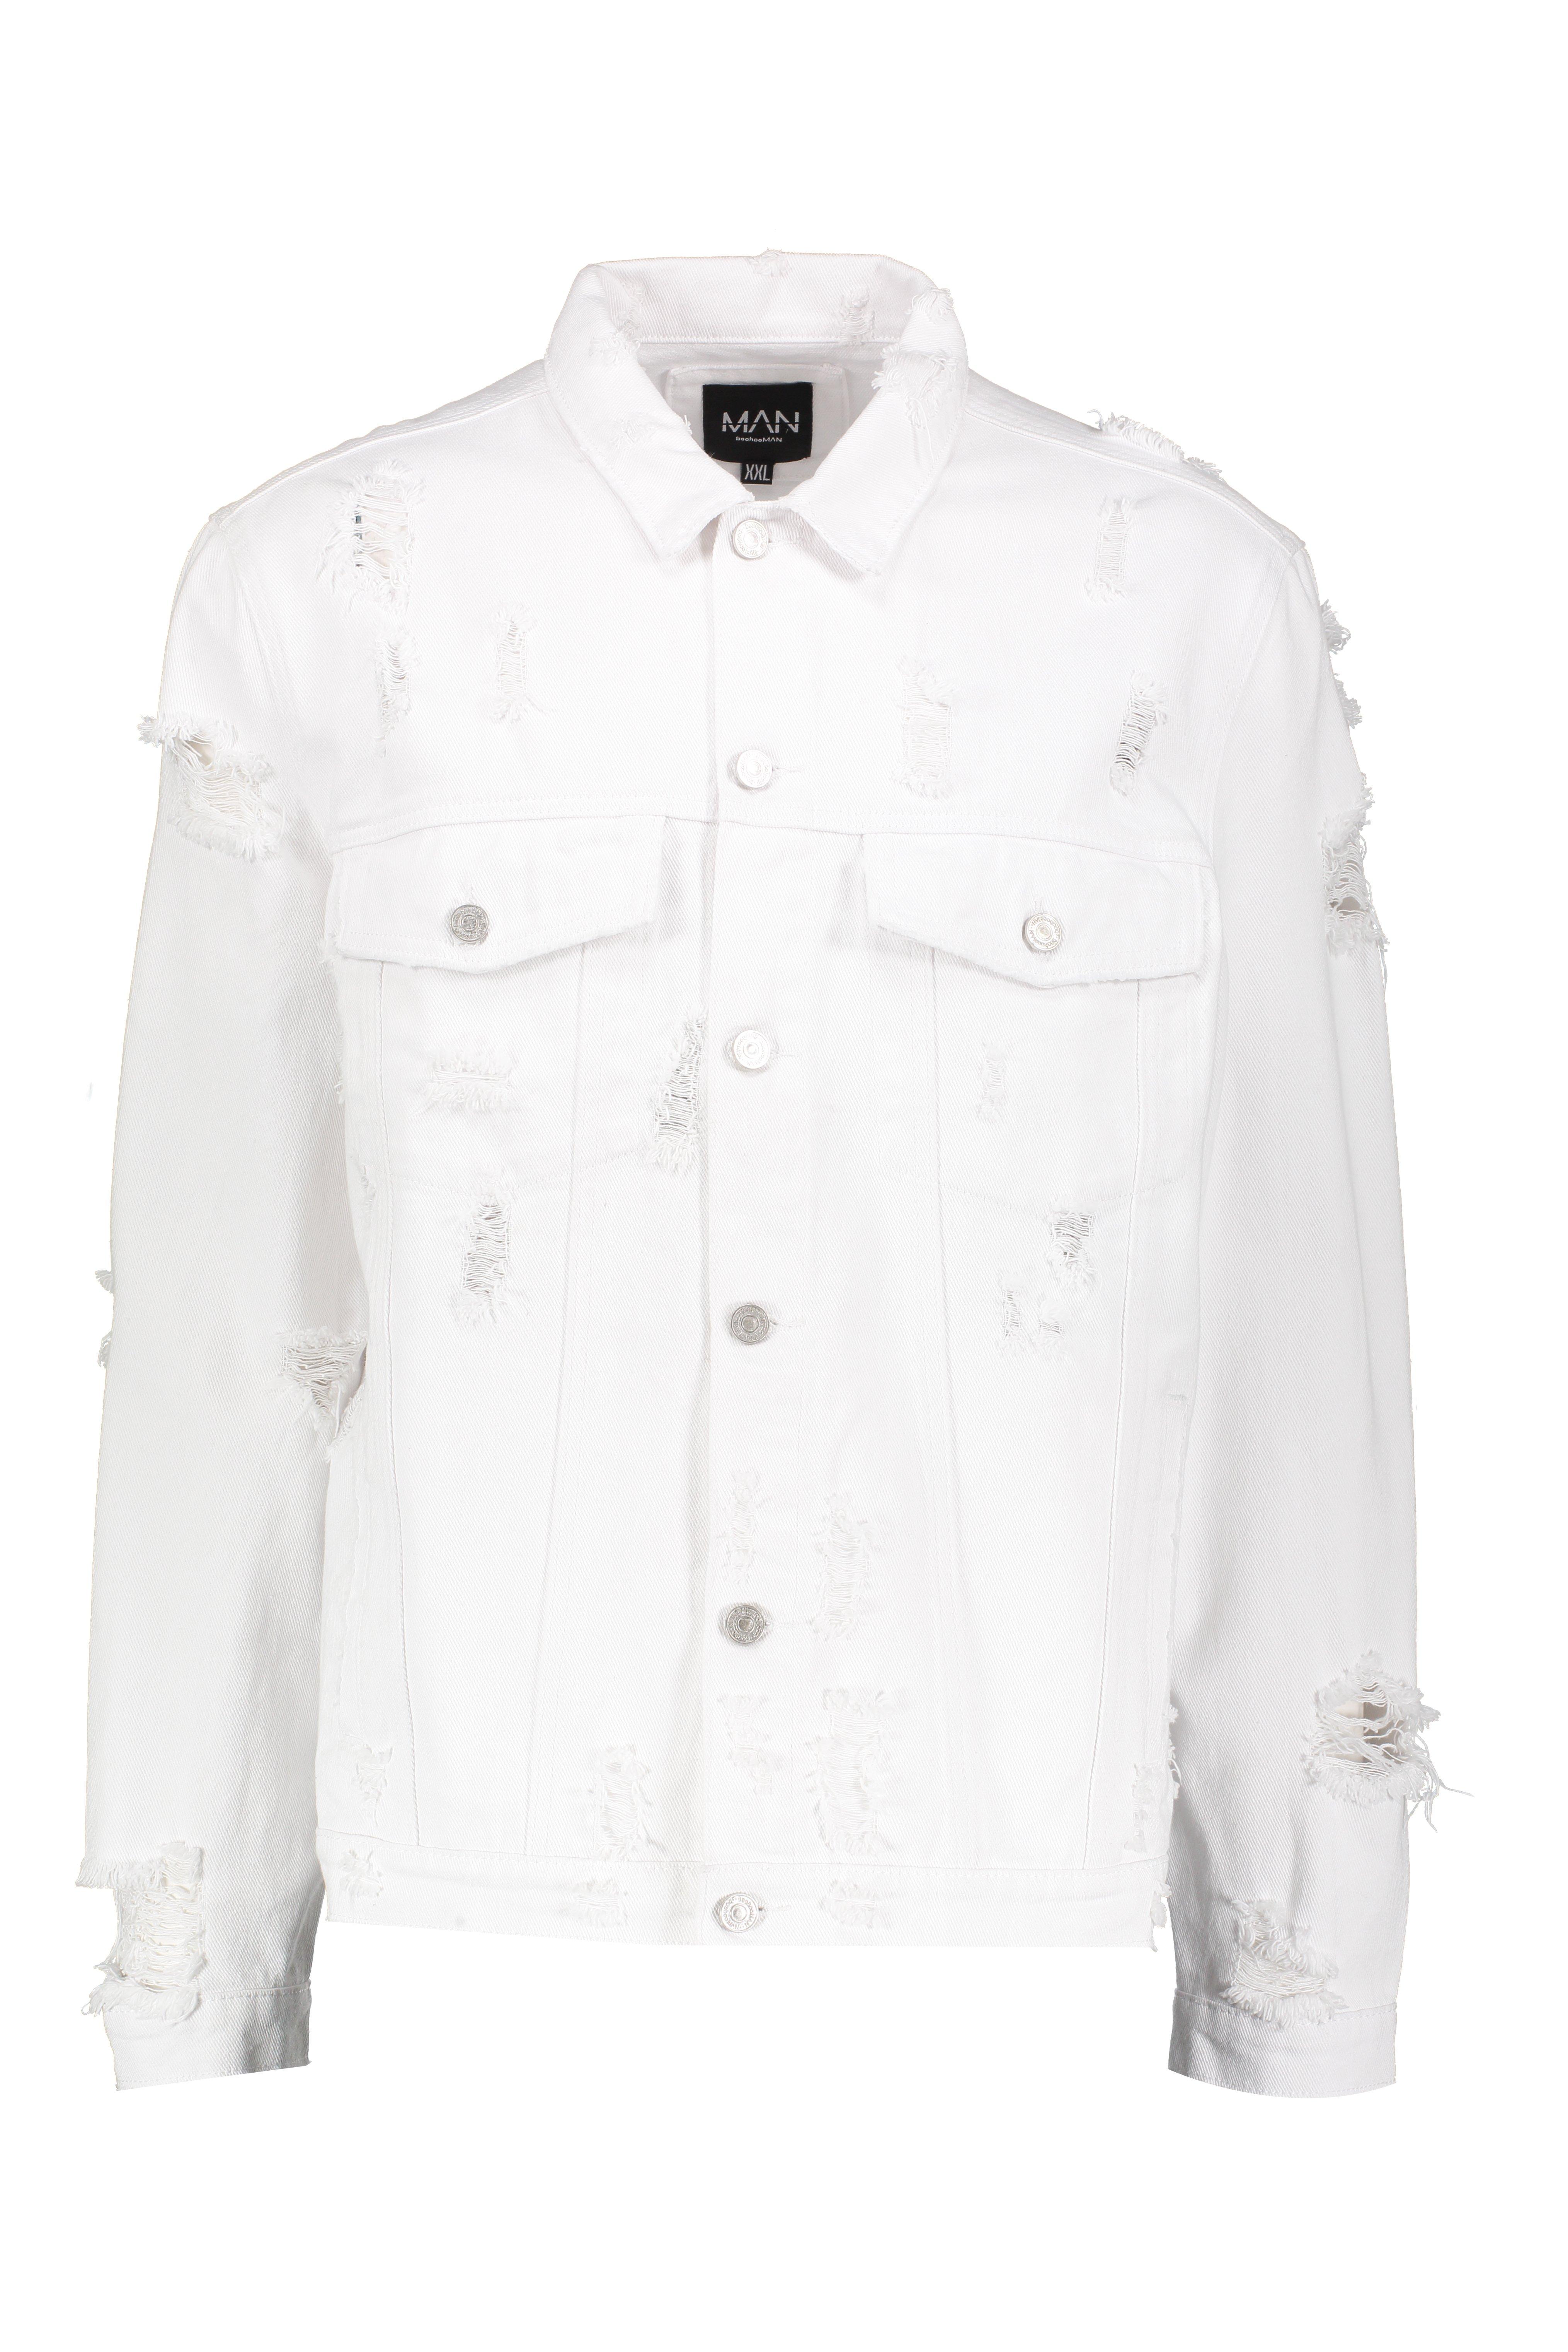 white jean jacket distressed